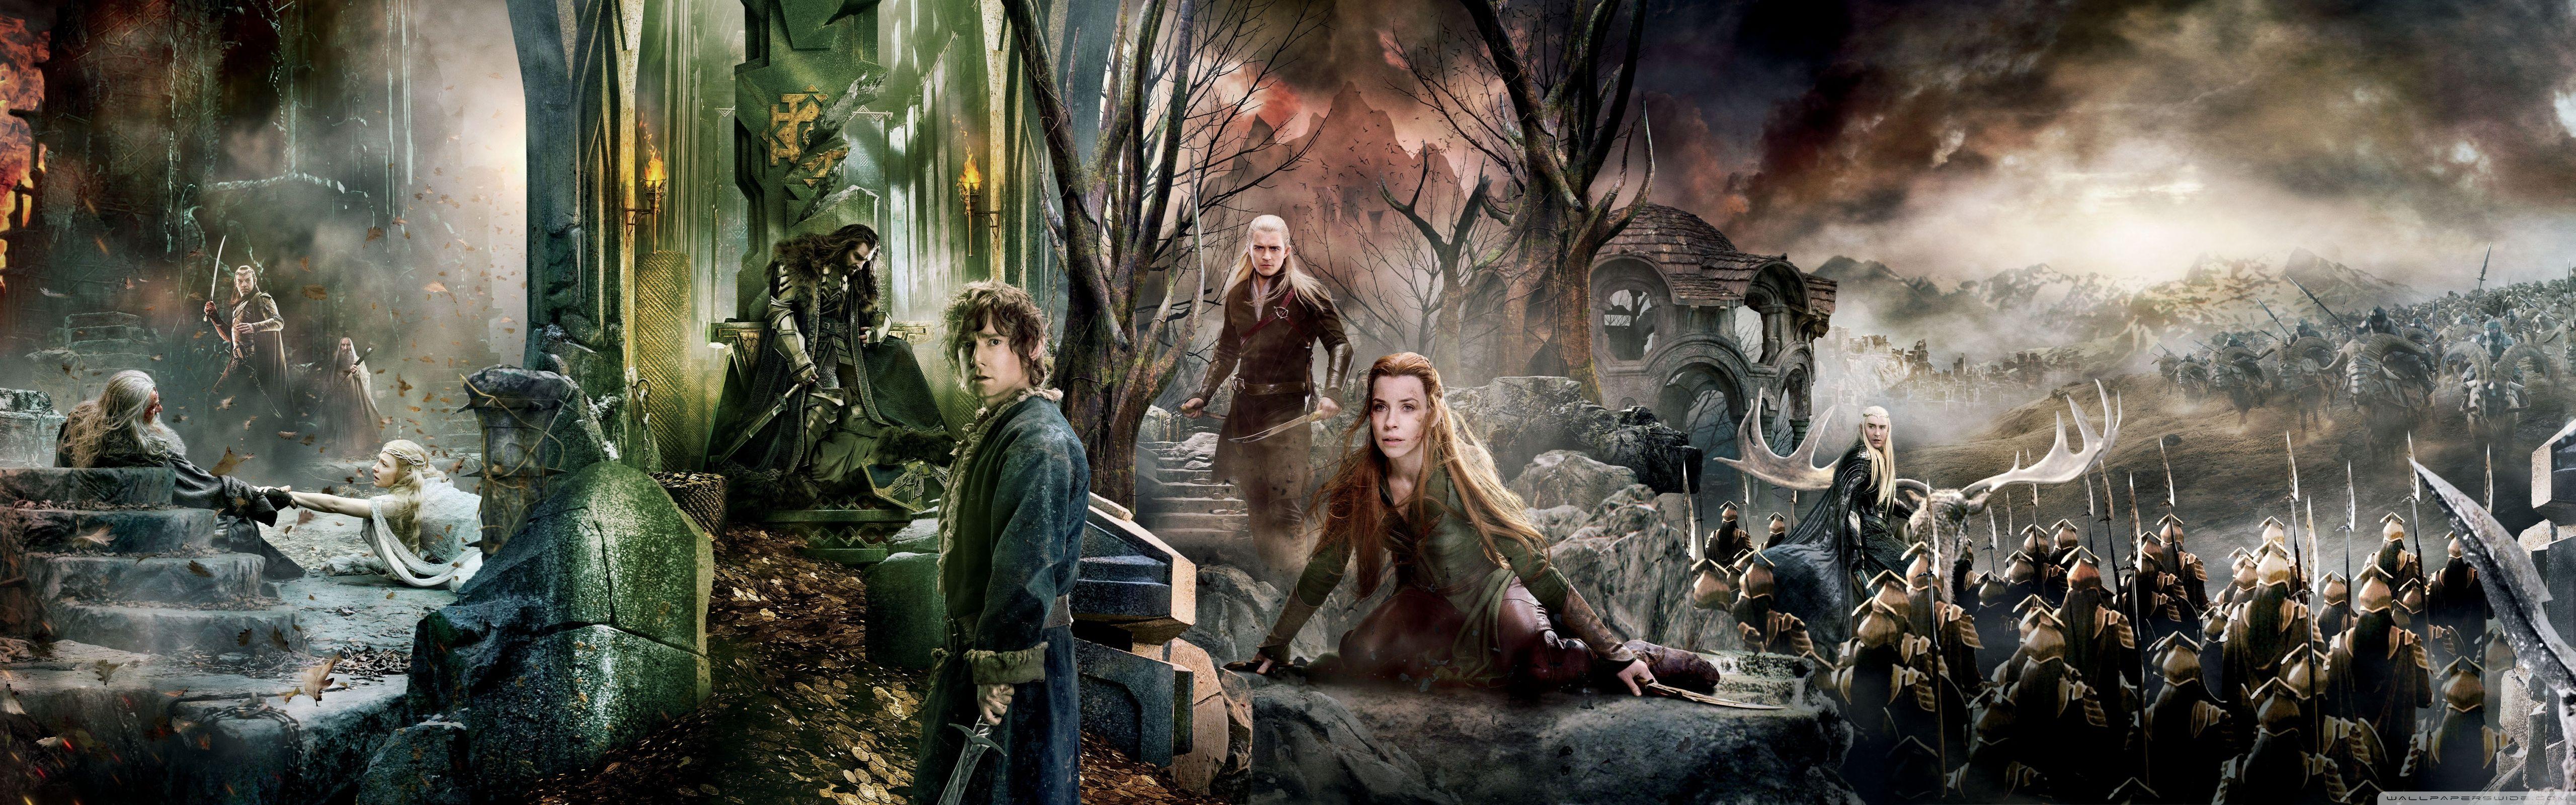 The Hobbit 3 Wallpapers - Wallpaper Cave